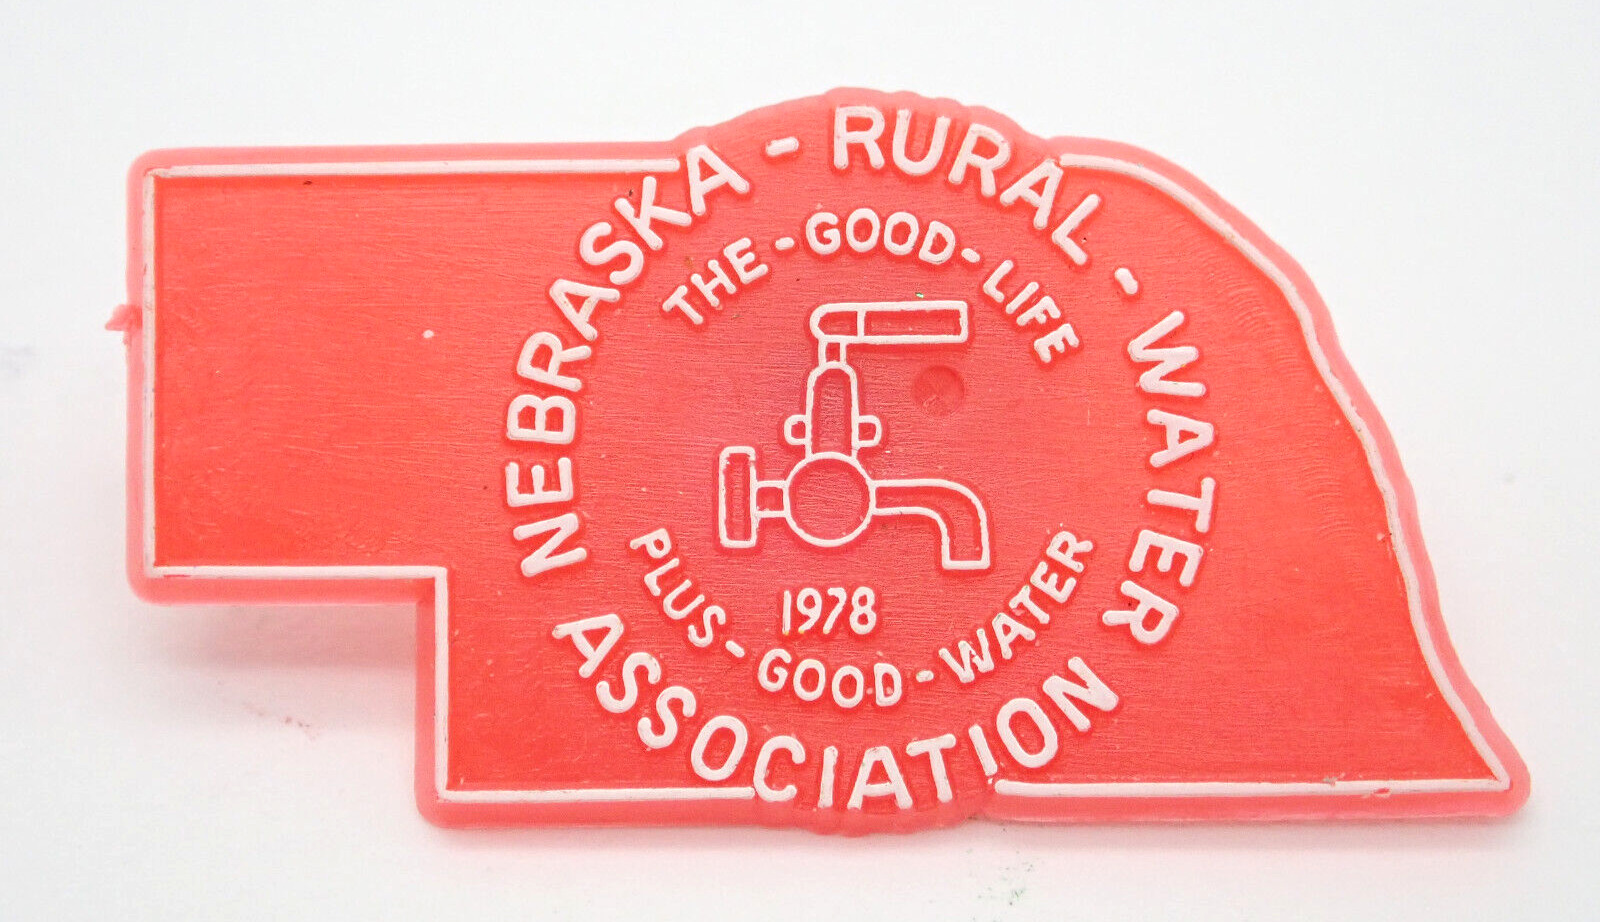 Nebraska Rural Water Association The Good Life Plus Good Water Vintage Lapel Pin